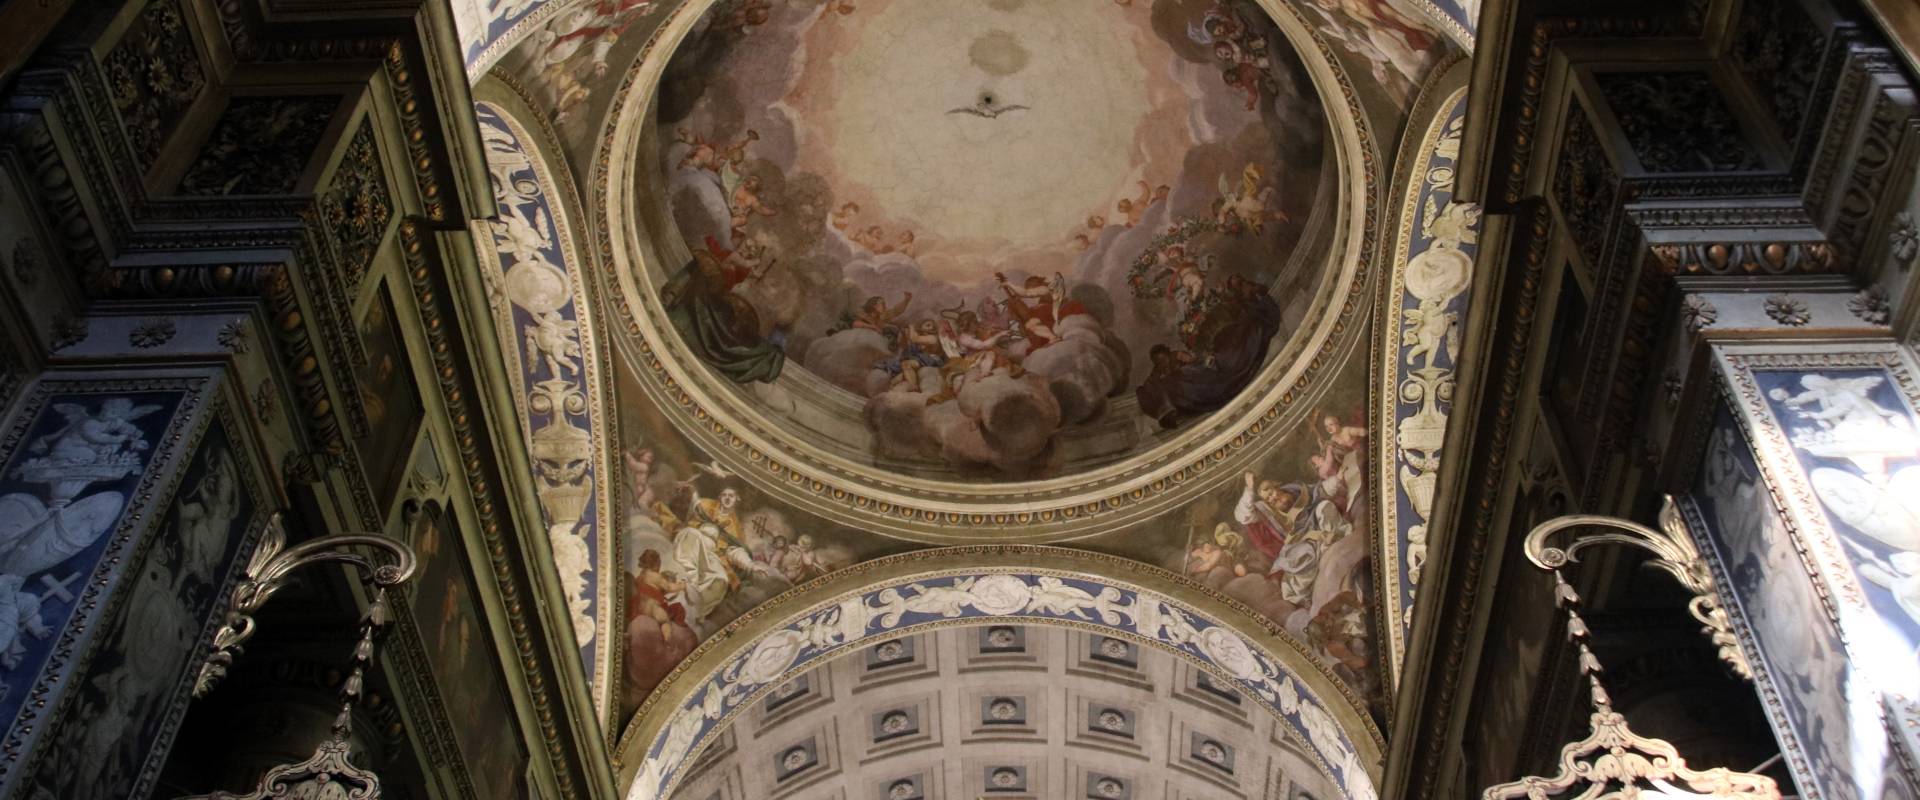 Basilica di Santa Maria di Campagna (Piacenza), interno 57 photo by Mongolo1984